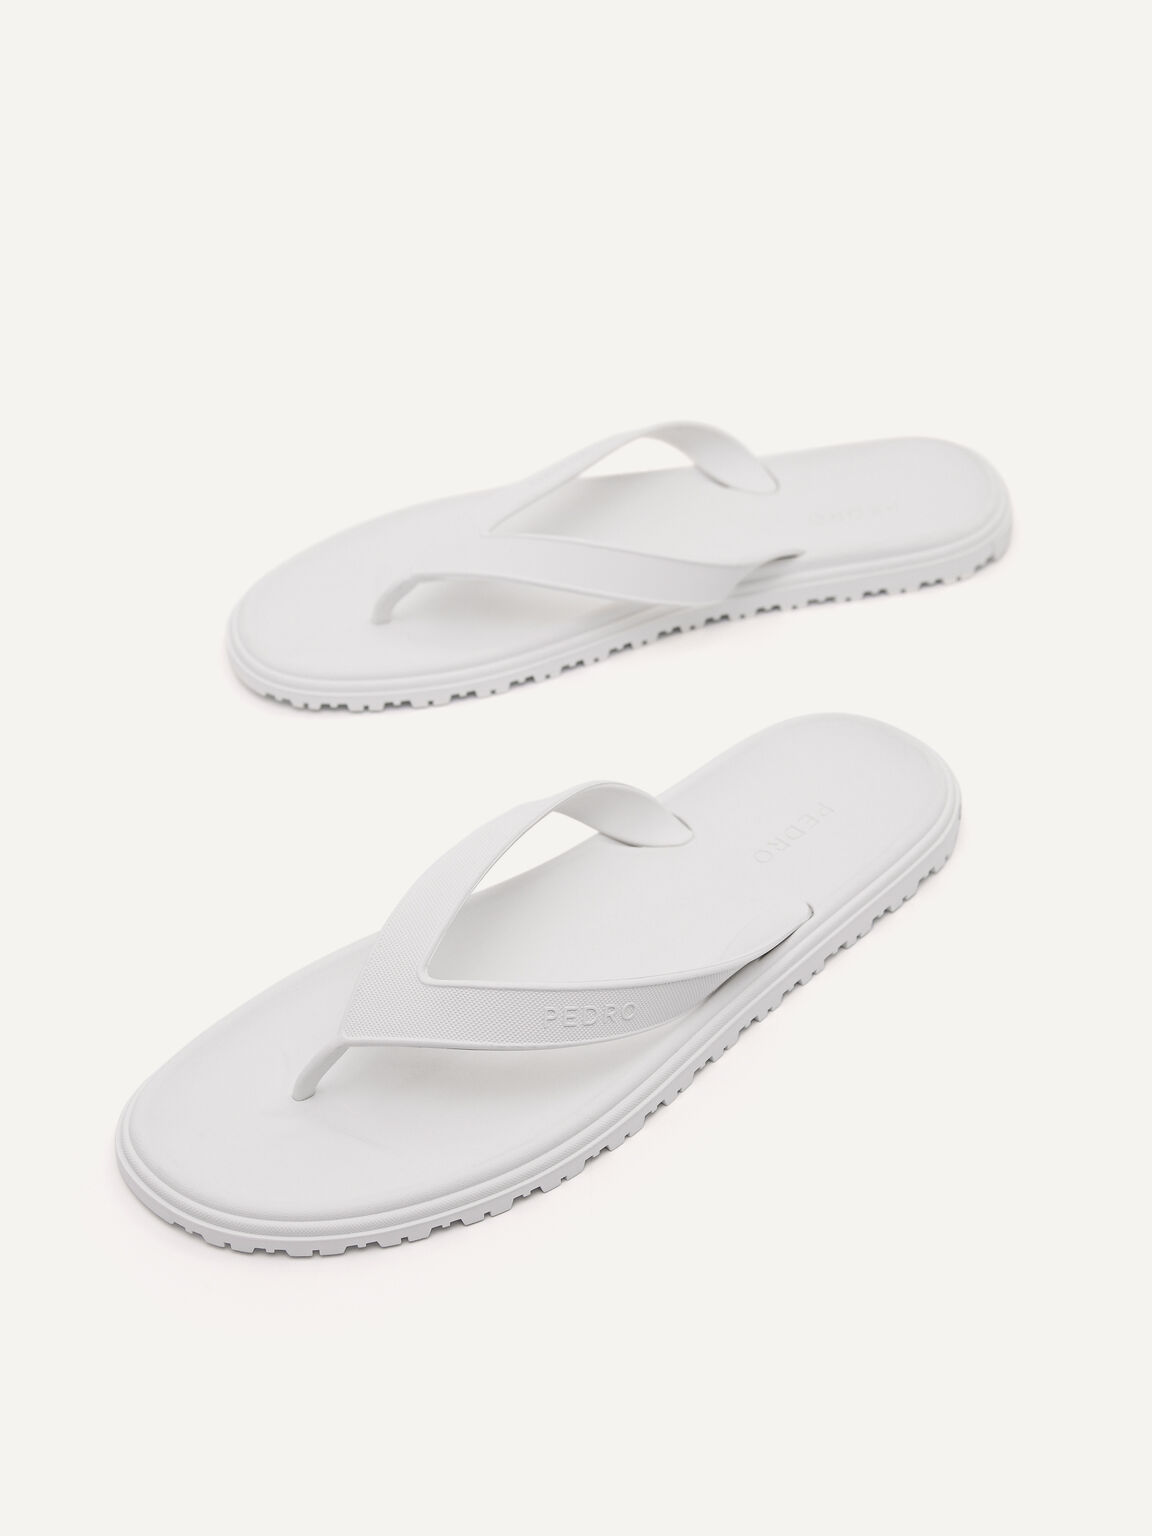 Thong Sandals, White